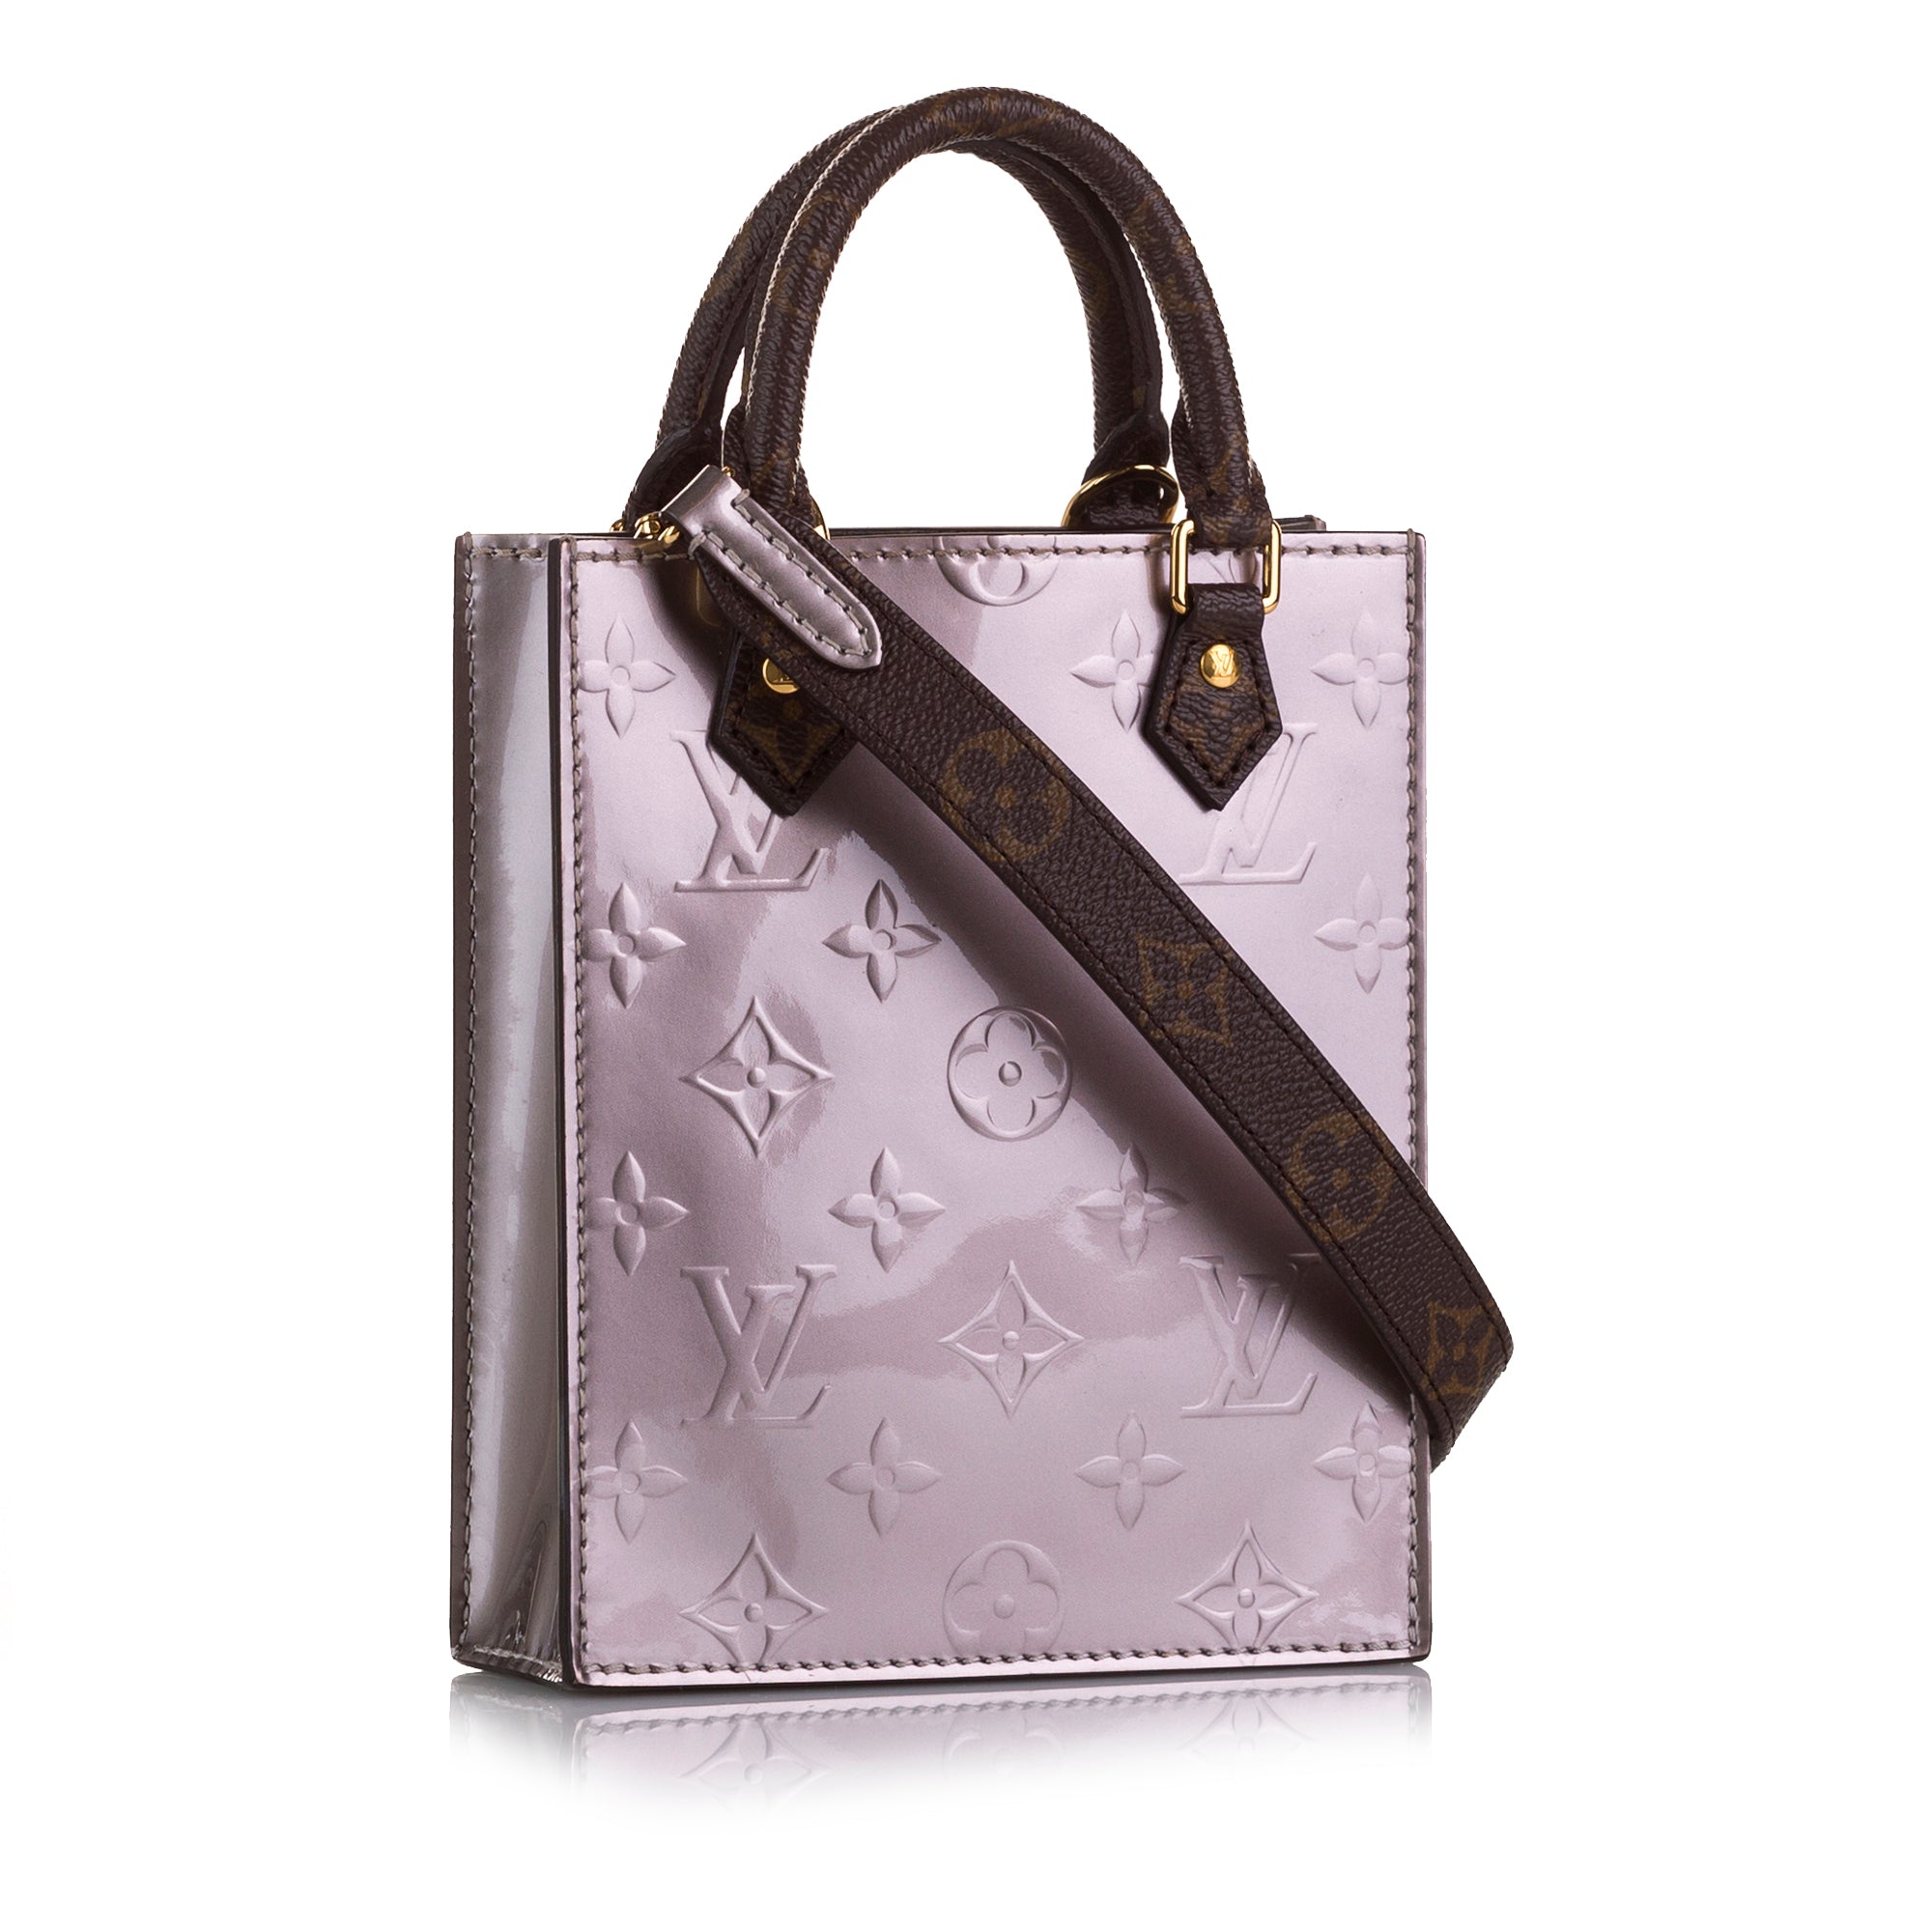 [Price Reduced] Brand New Louis Vuitton Petit Sac Plat Mini Tote Bag